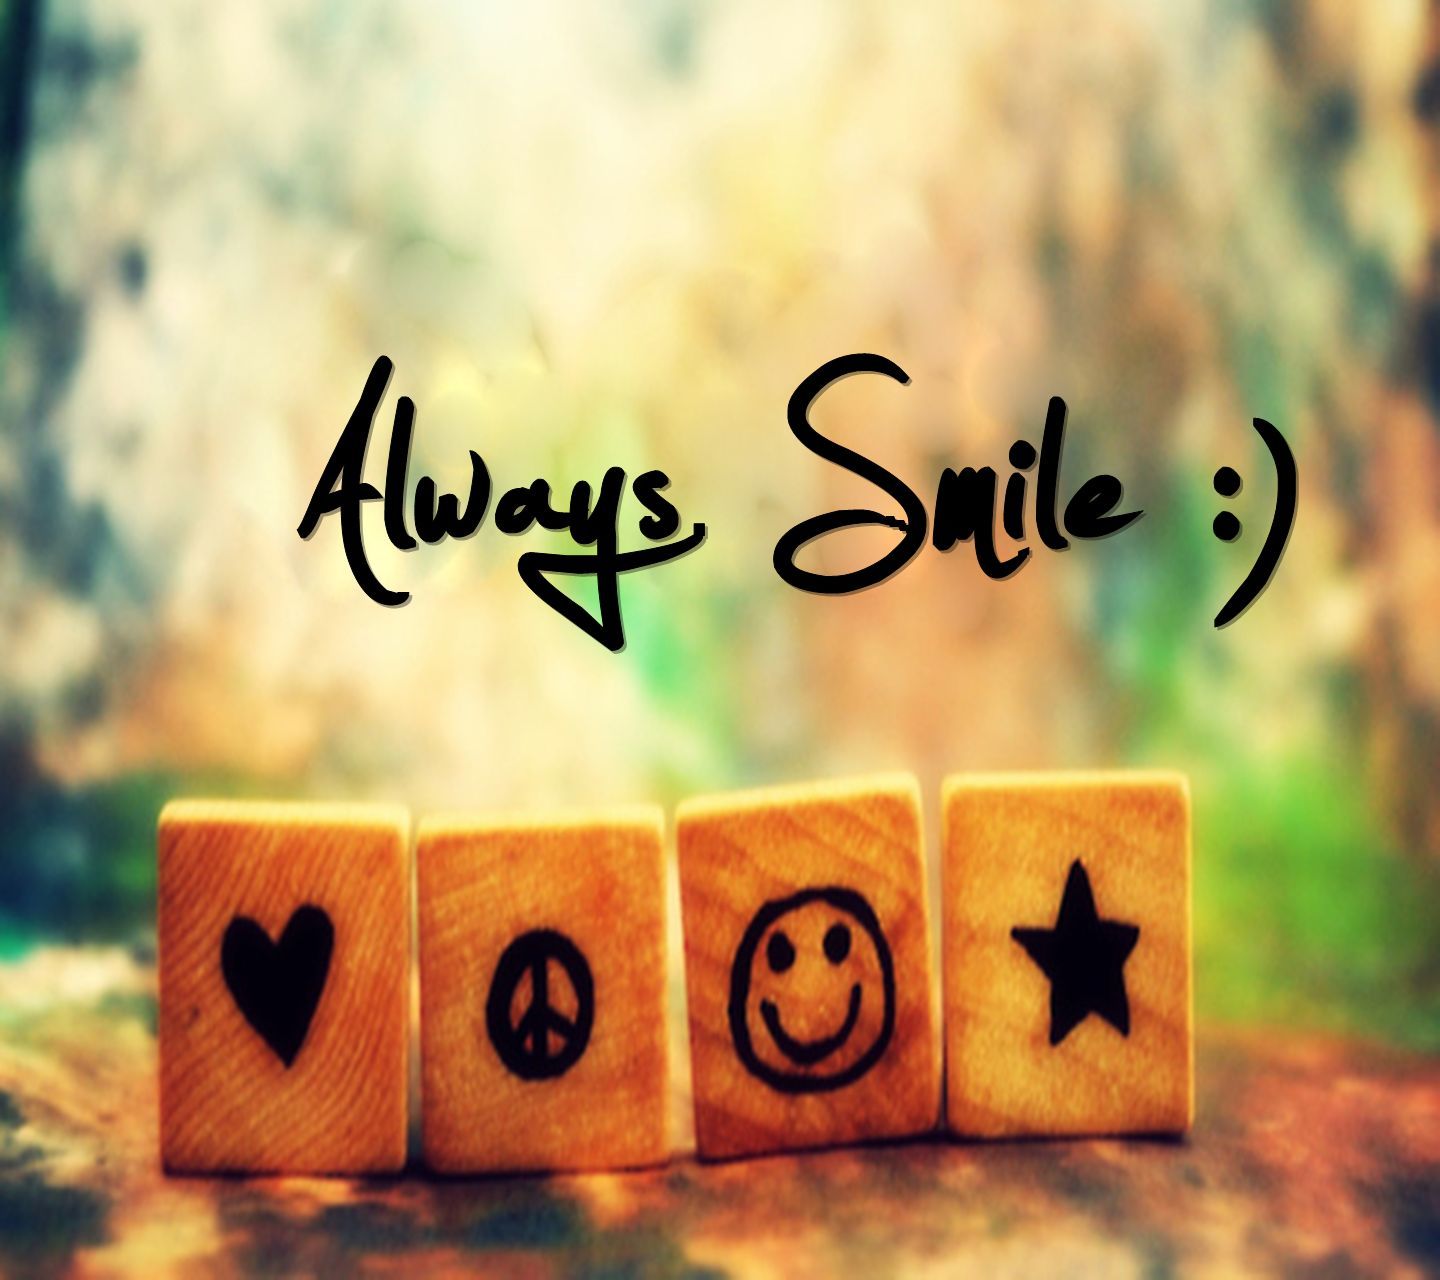 http://3.bp.blogspot.com/-II_hRV-kWp8/UJKNzbKPg_I/AAAAAAAAPIk/6R1gHP5OzuI/s1600/always_smile.jpg